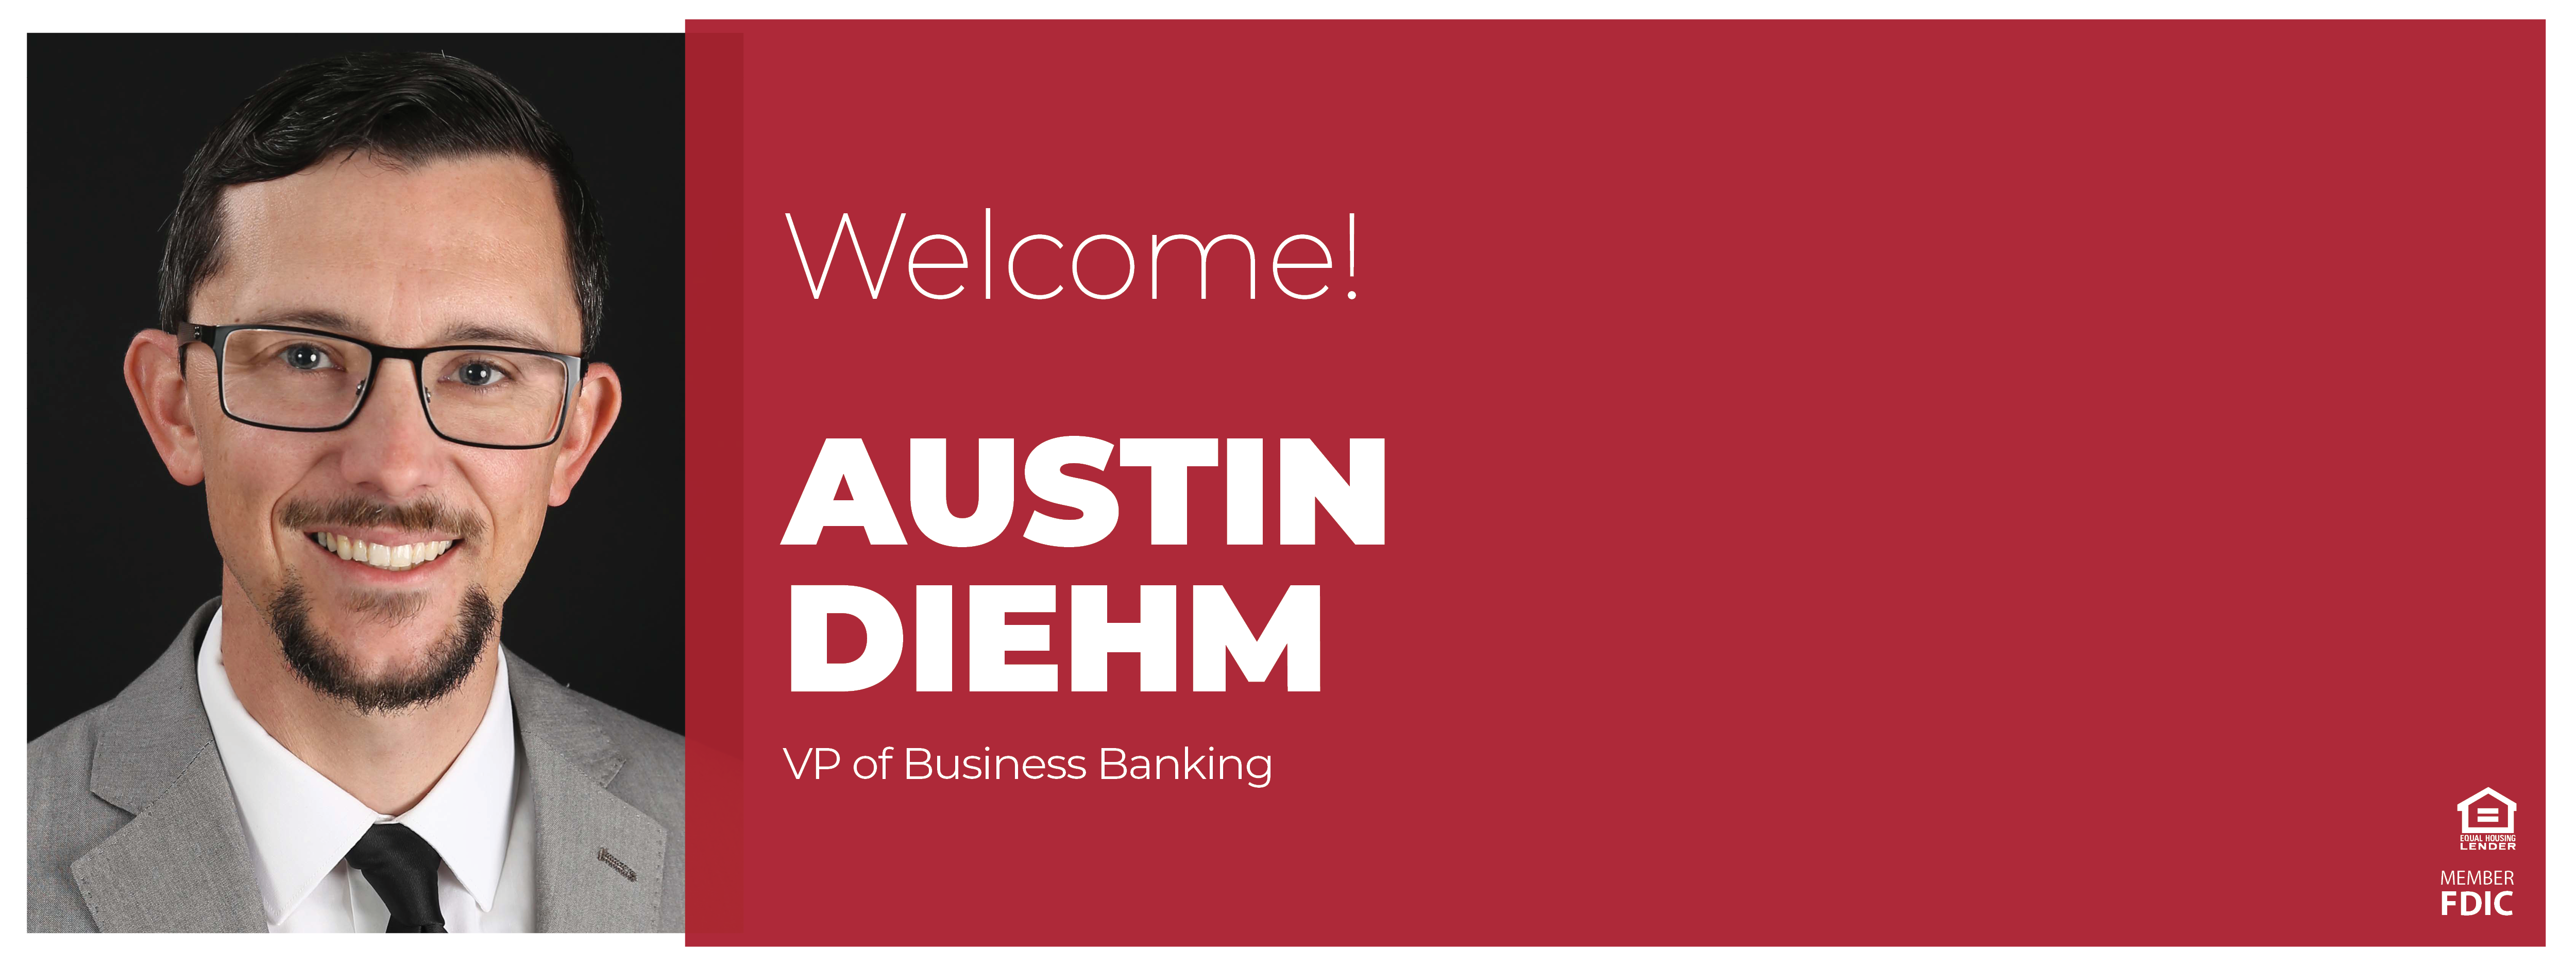 Welcome Austin Diehm